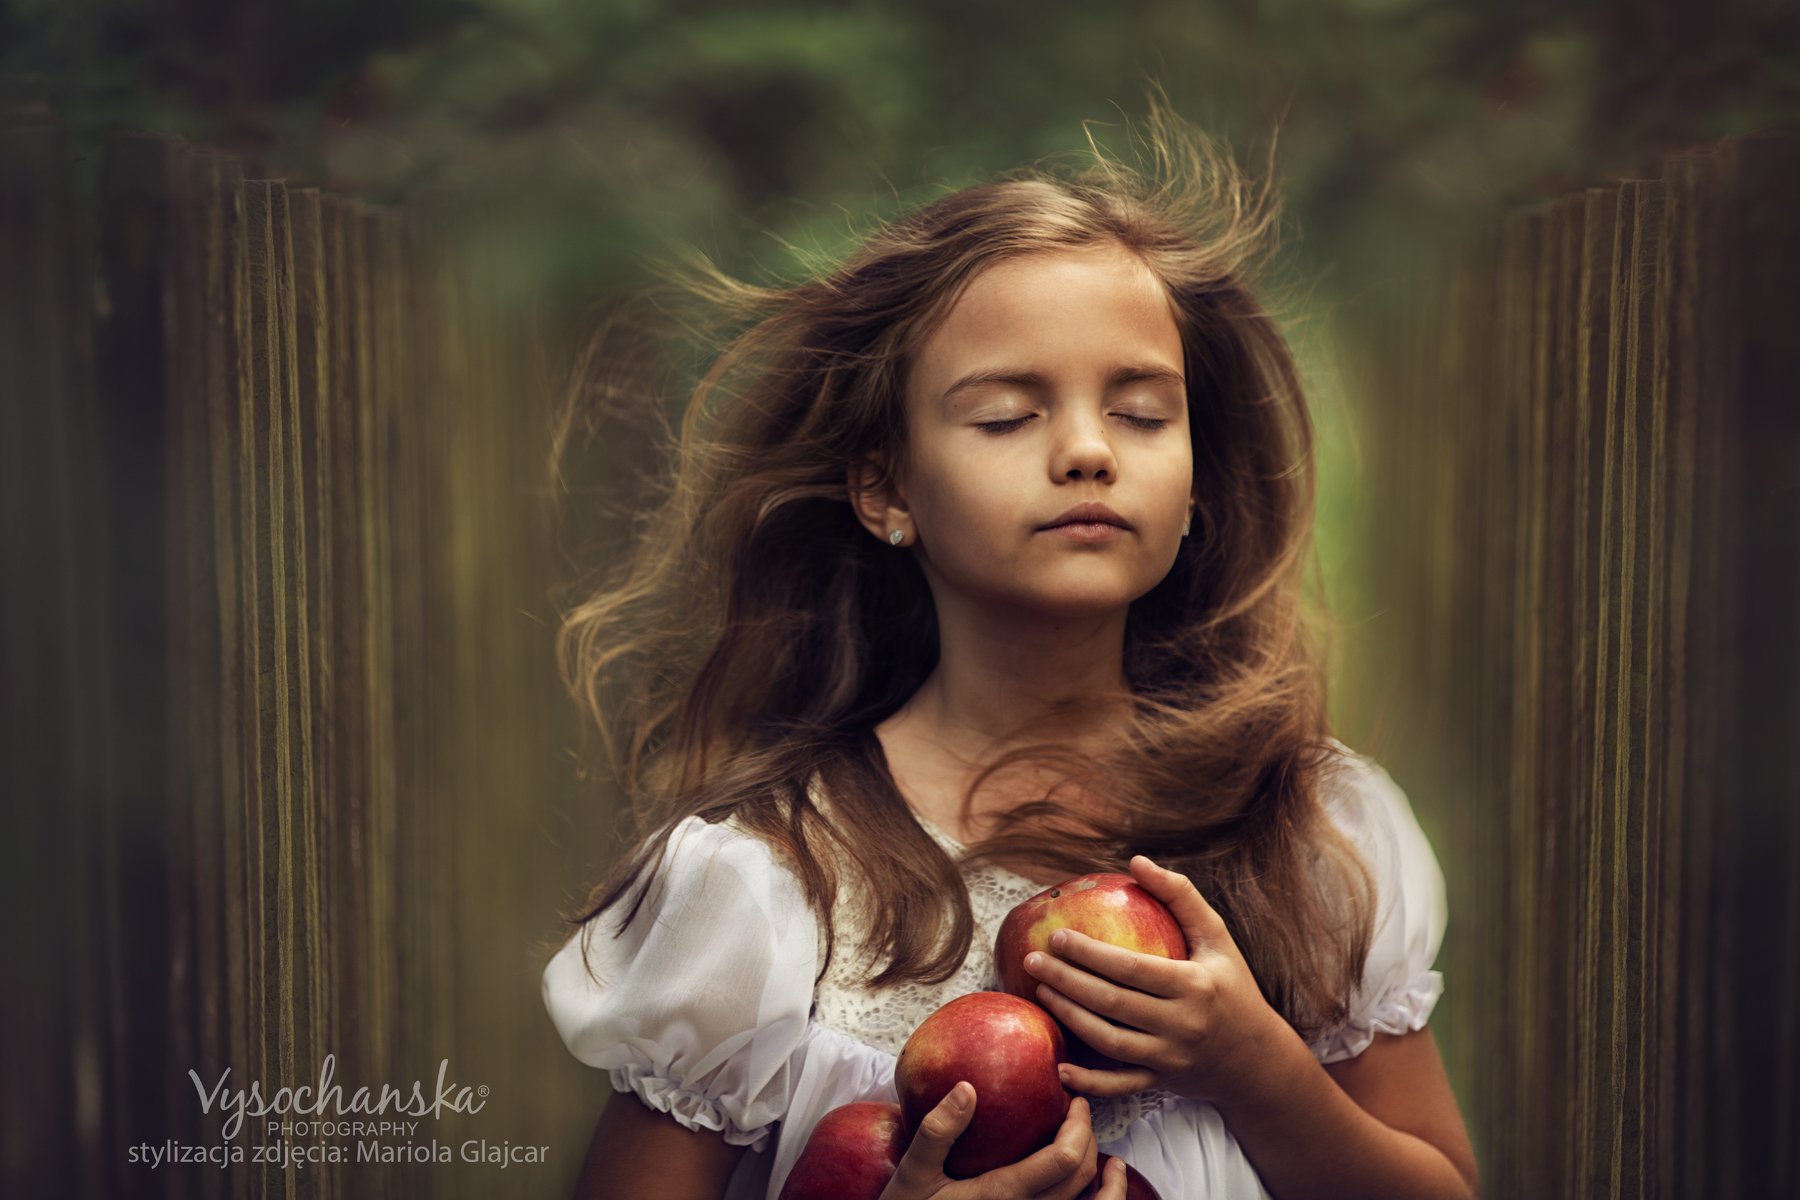 girl, little, eyes, grey, portrait, девочка, голубые глаза, портрет, apples, Vysochanska Photography